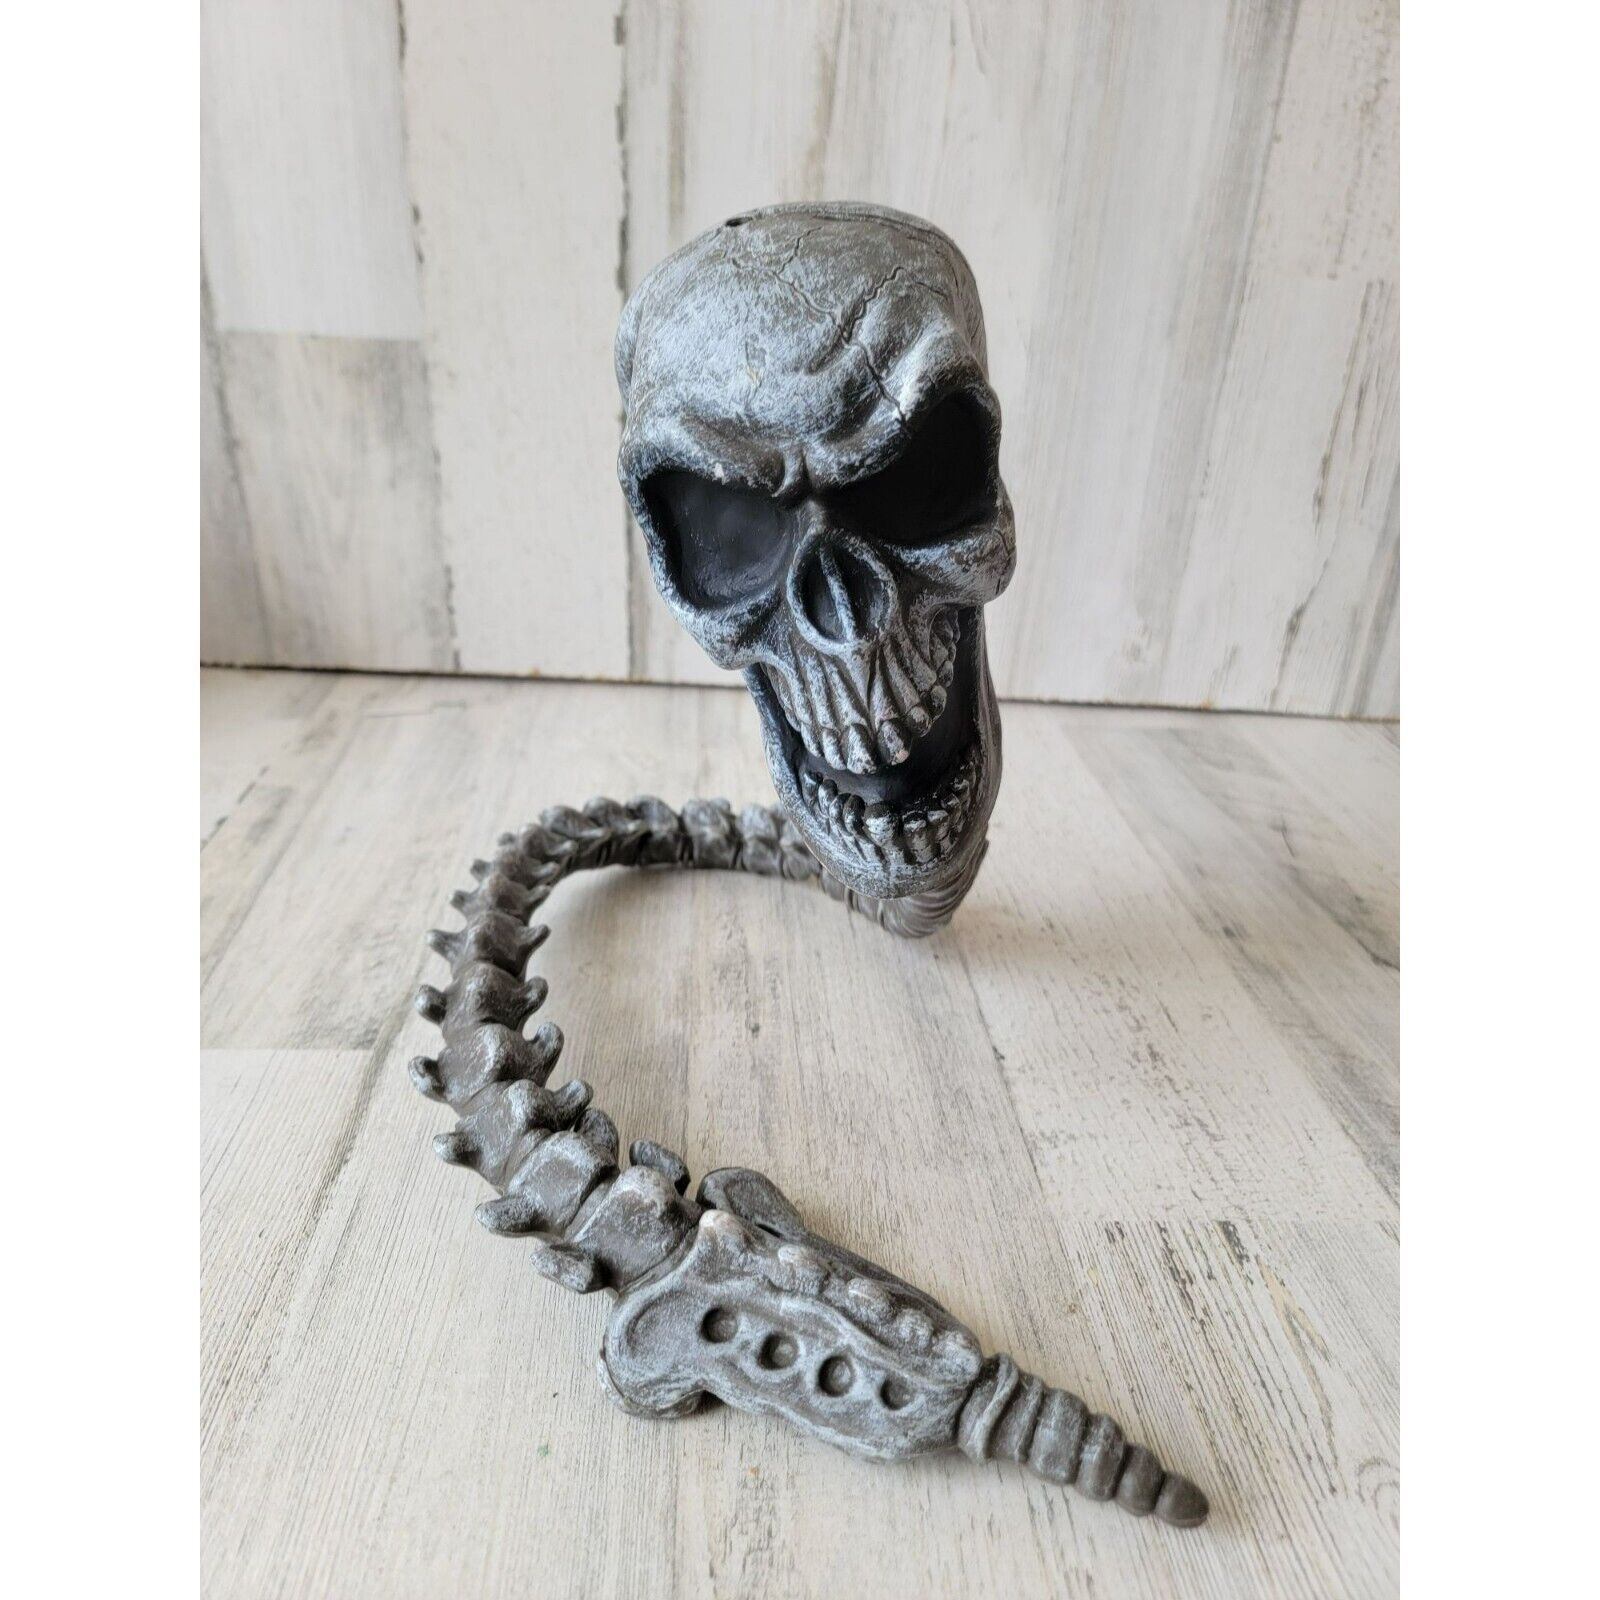 Adjustable skull spine scary Halloween prop Decor spooky zombie skeleton